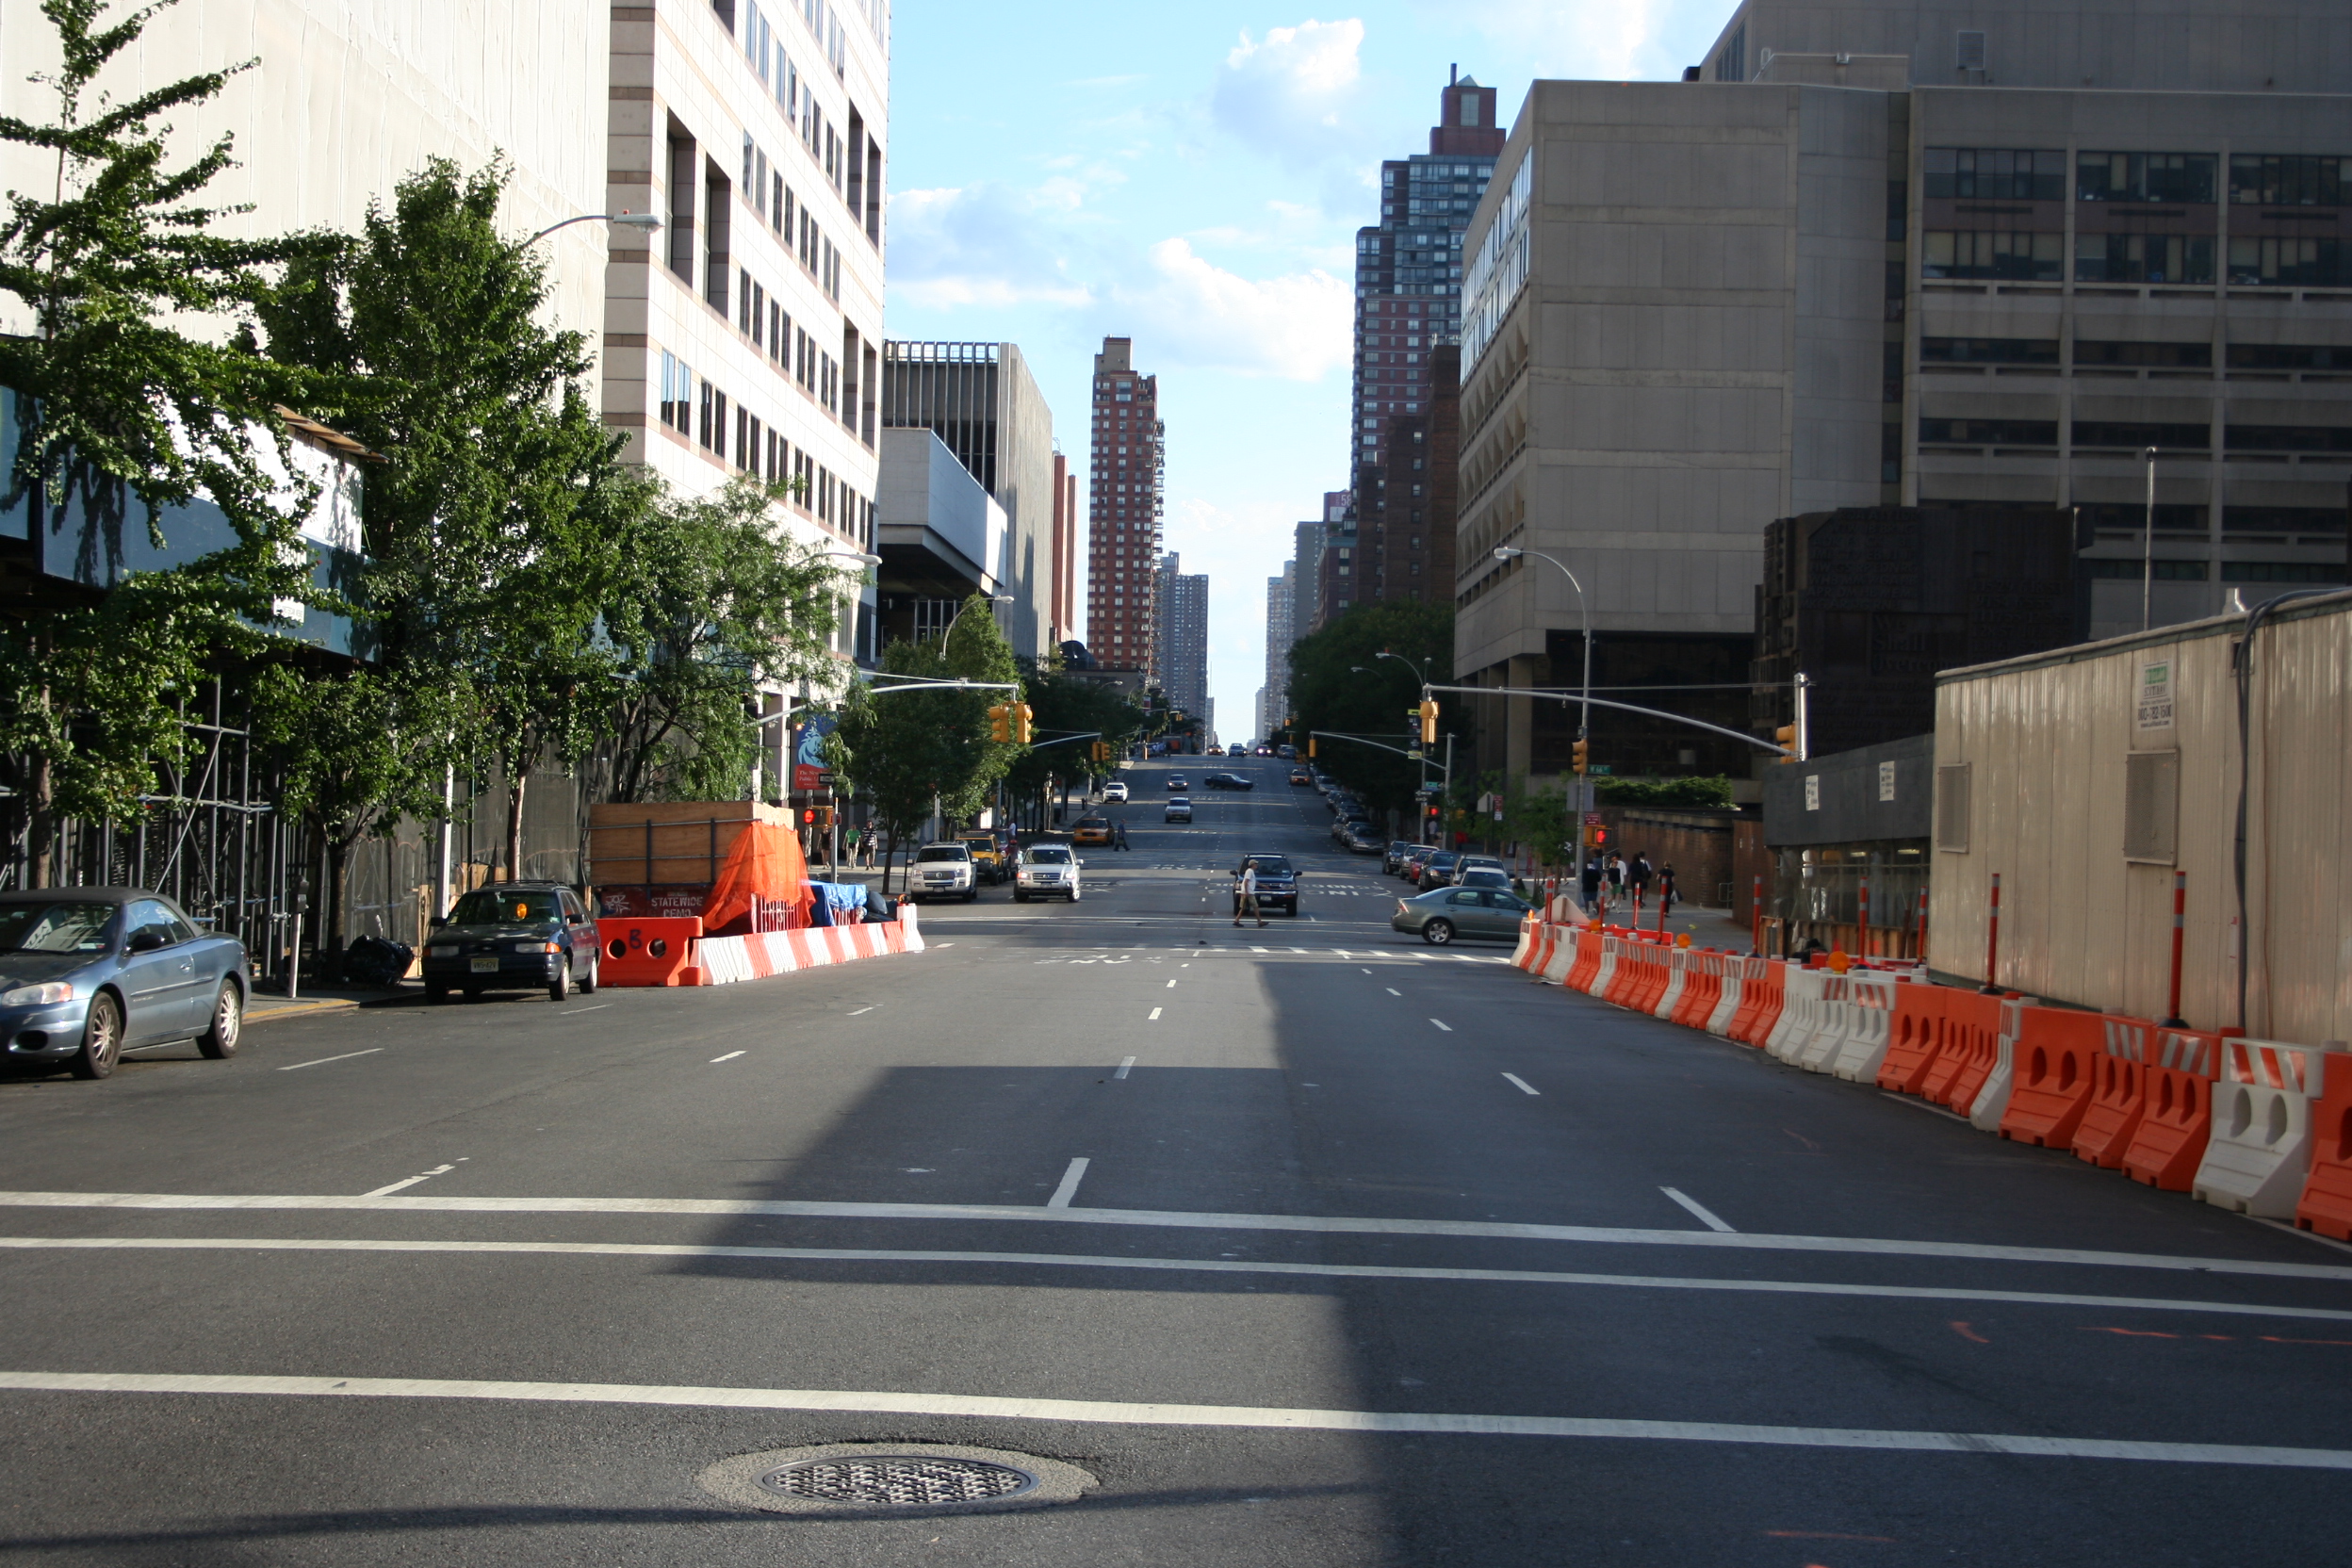 Ковид на улице. Улицы Нью-Йорка вид сбоку. Дорога в Нью Йорке сбоку. Улица Нью-Йорка сбоку днём. Улица вид сбоку.